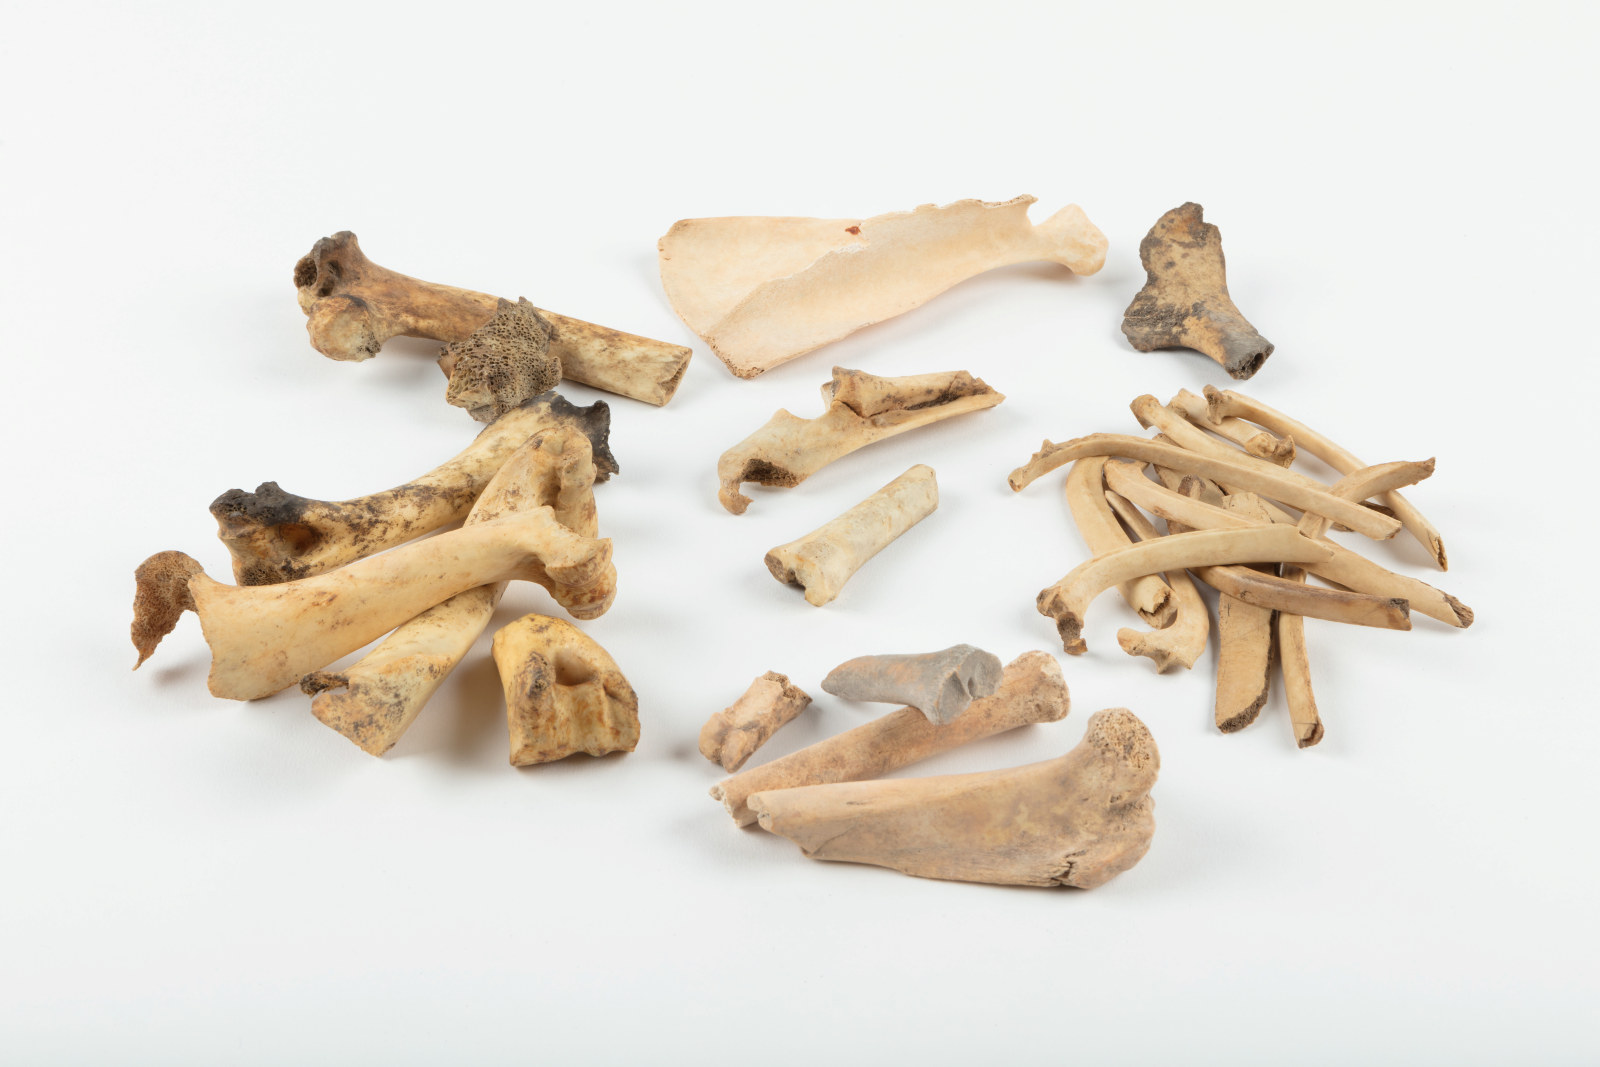 Assorted bones including sheep, goat and pig bones